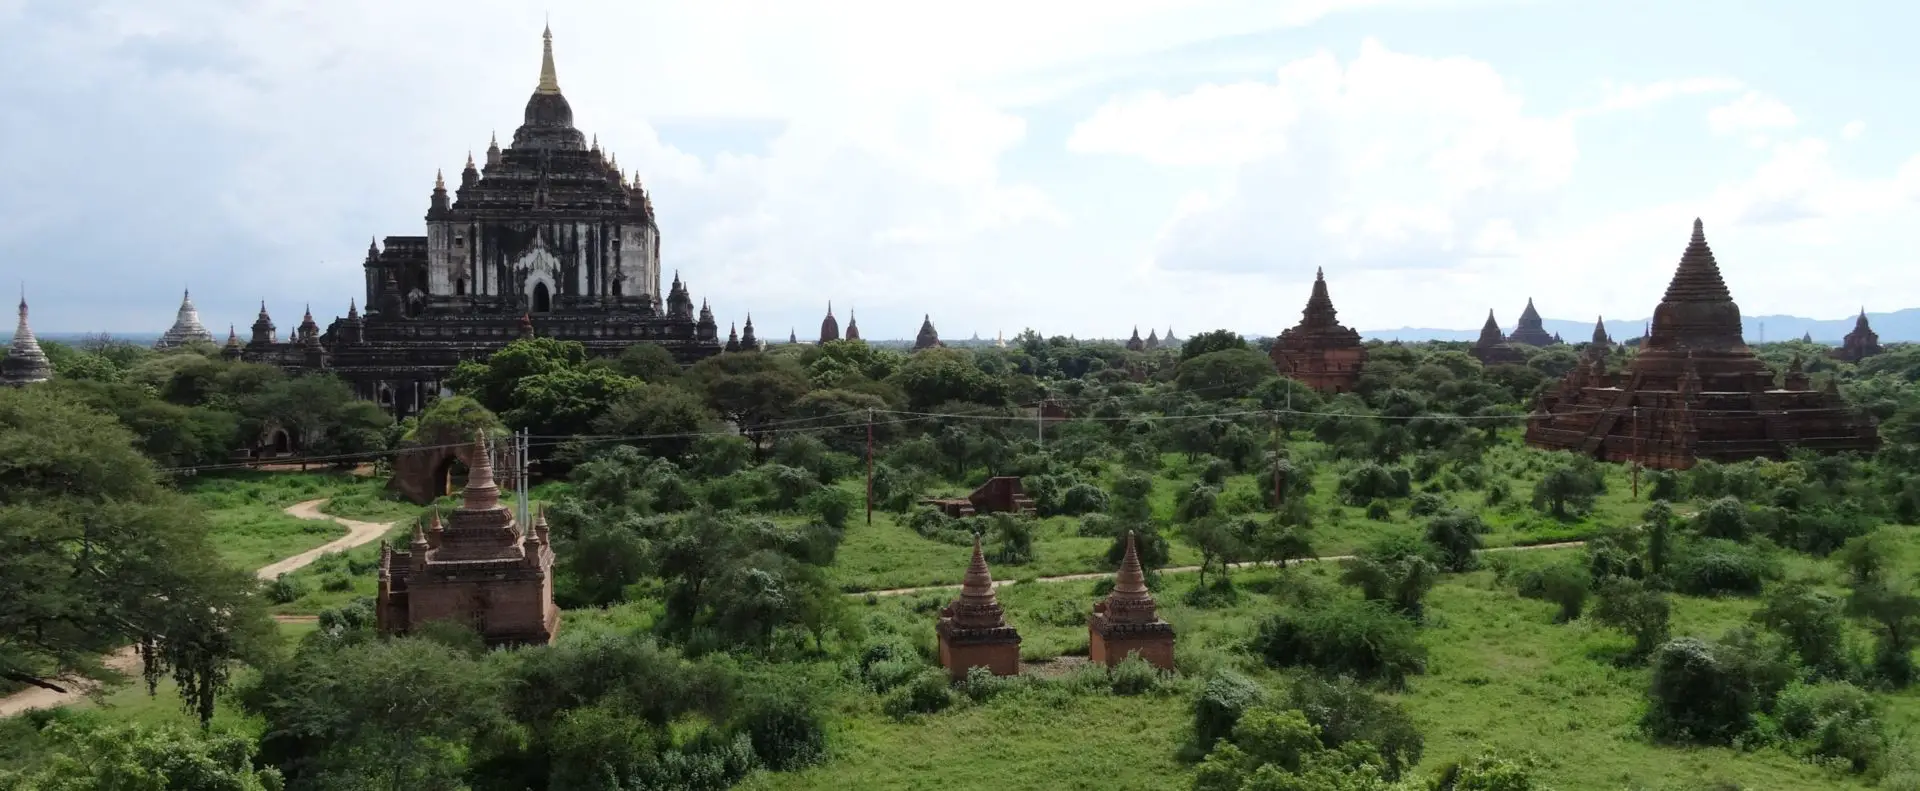 A field full of ancient Temples in Bagan, Myanmar